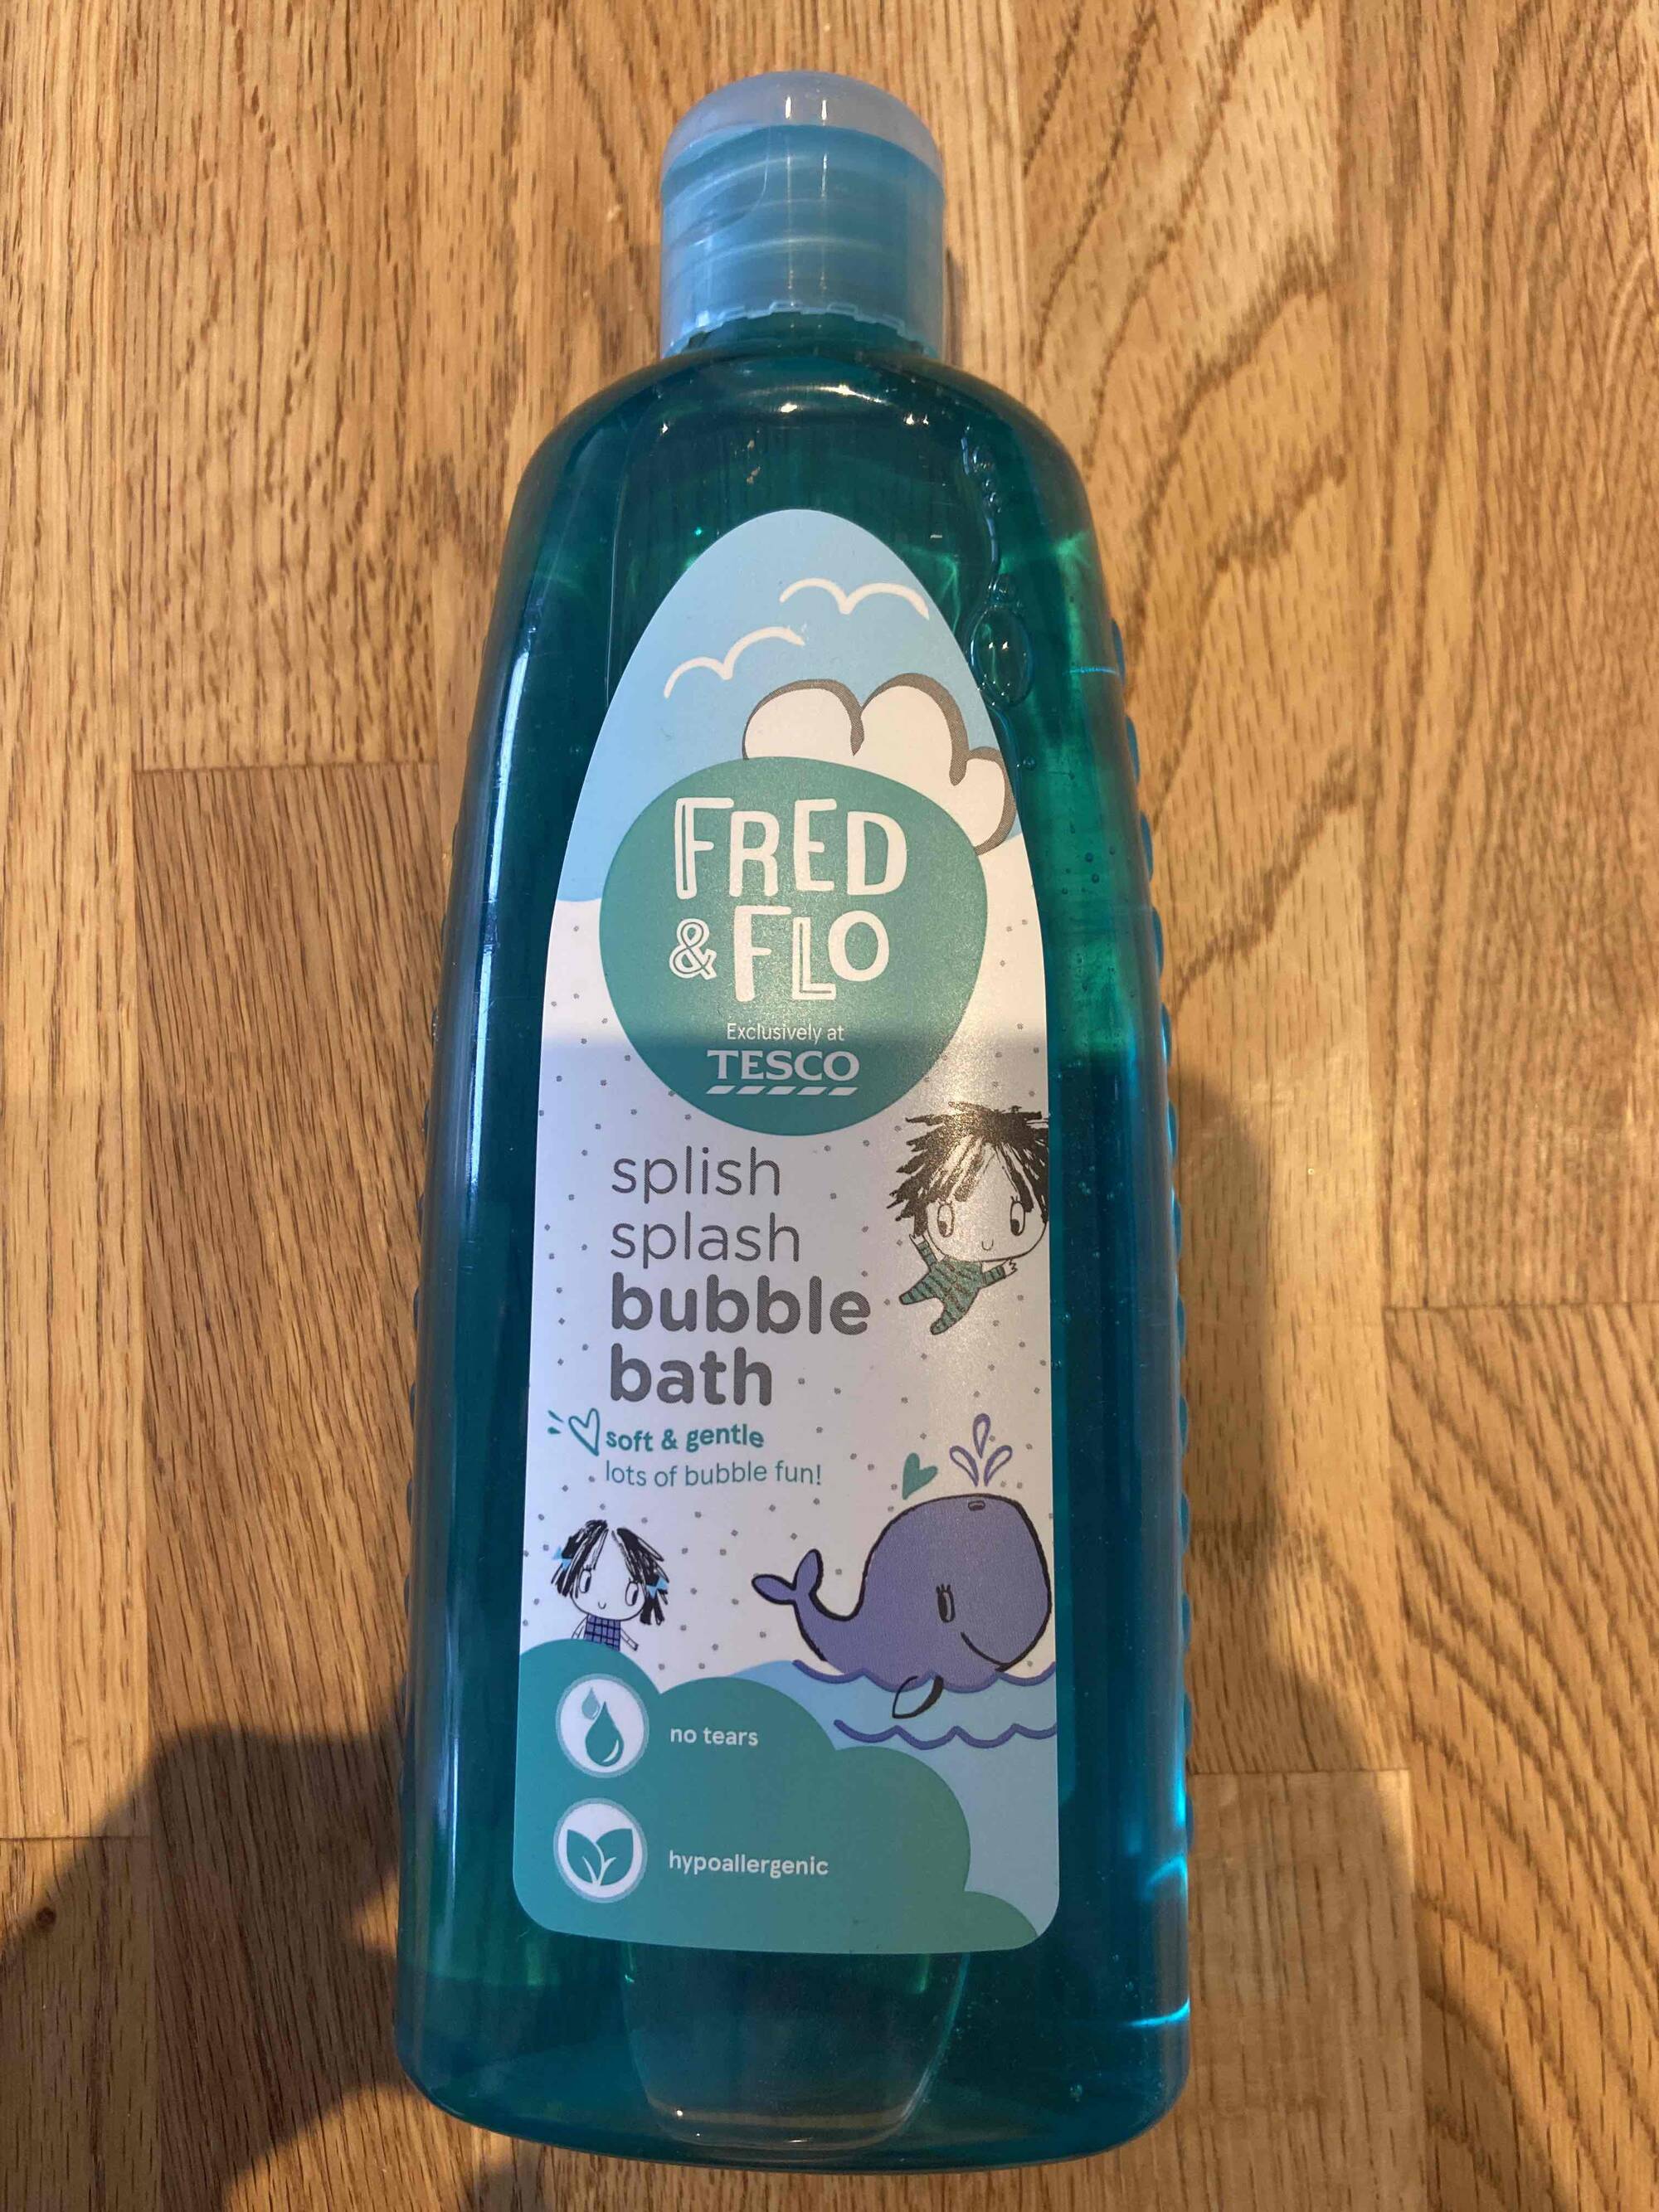 TESCO - Fred & flo - Splish splash bubble bath